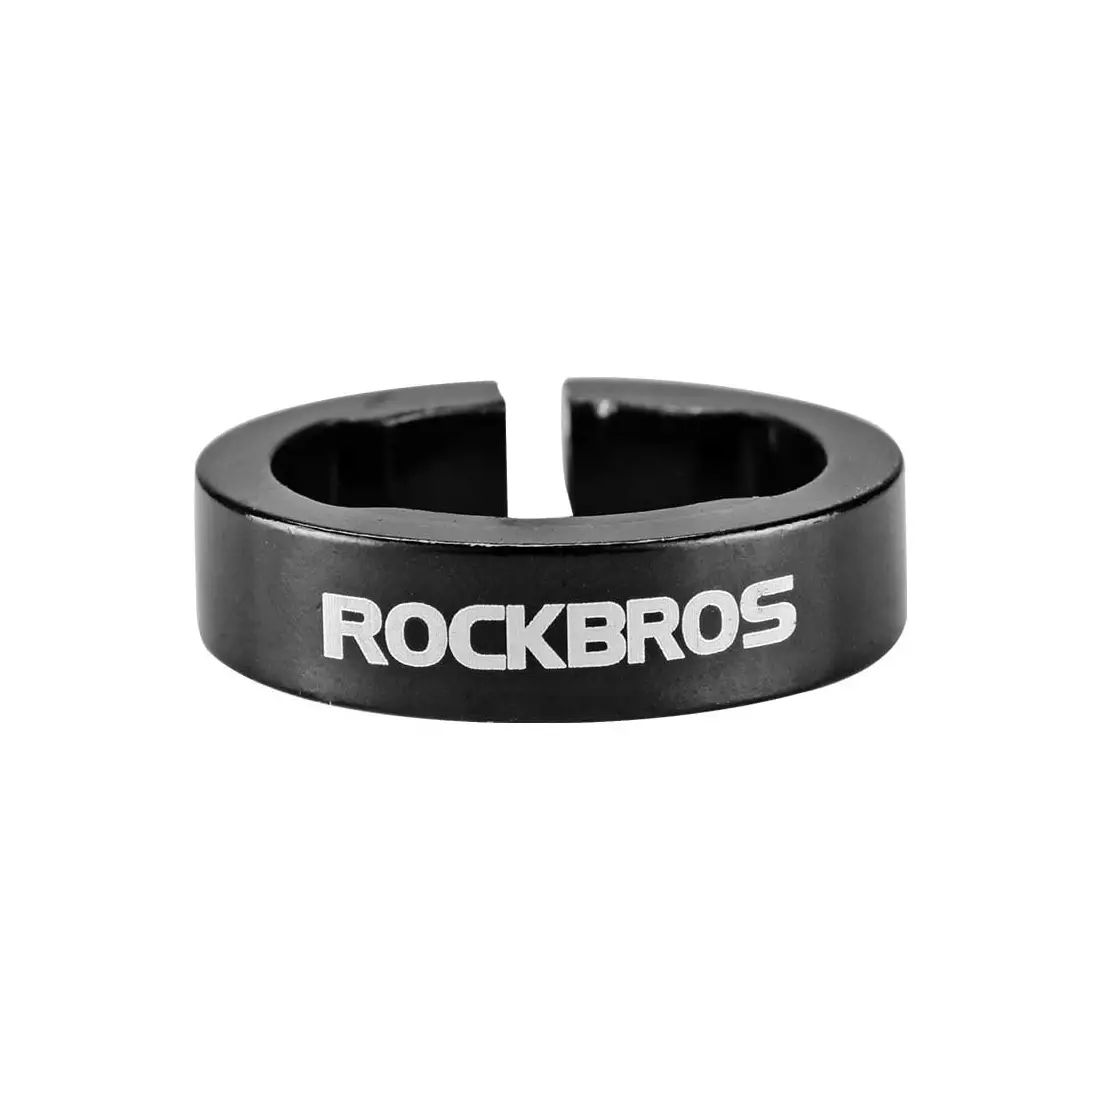 Rockbros handlebar grips, black 2017-14ABK